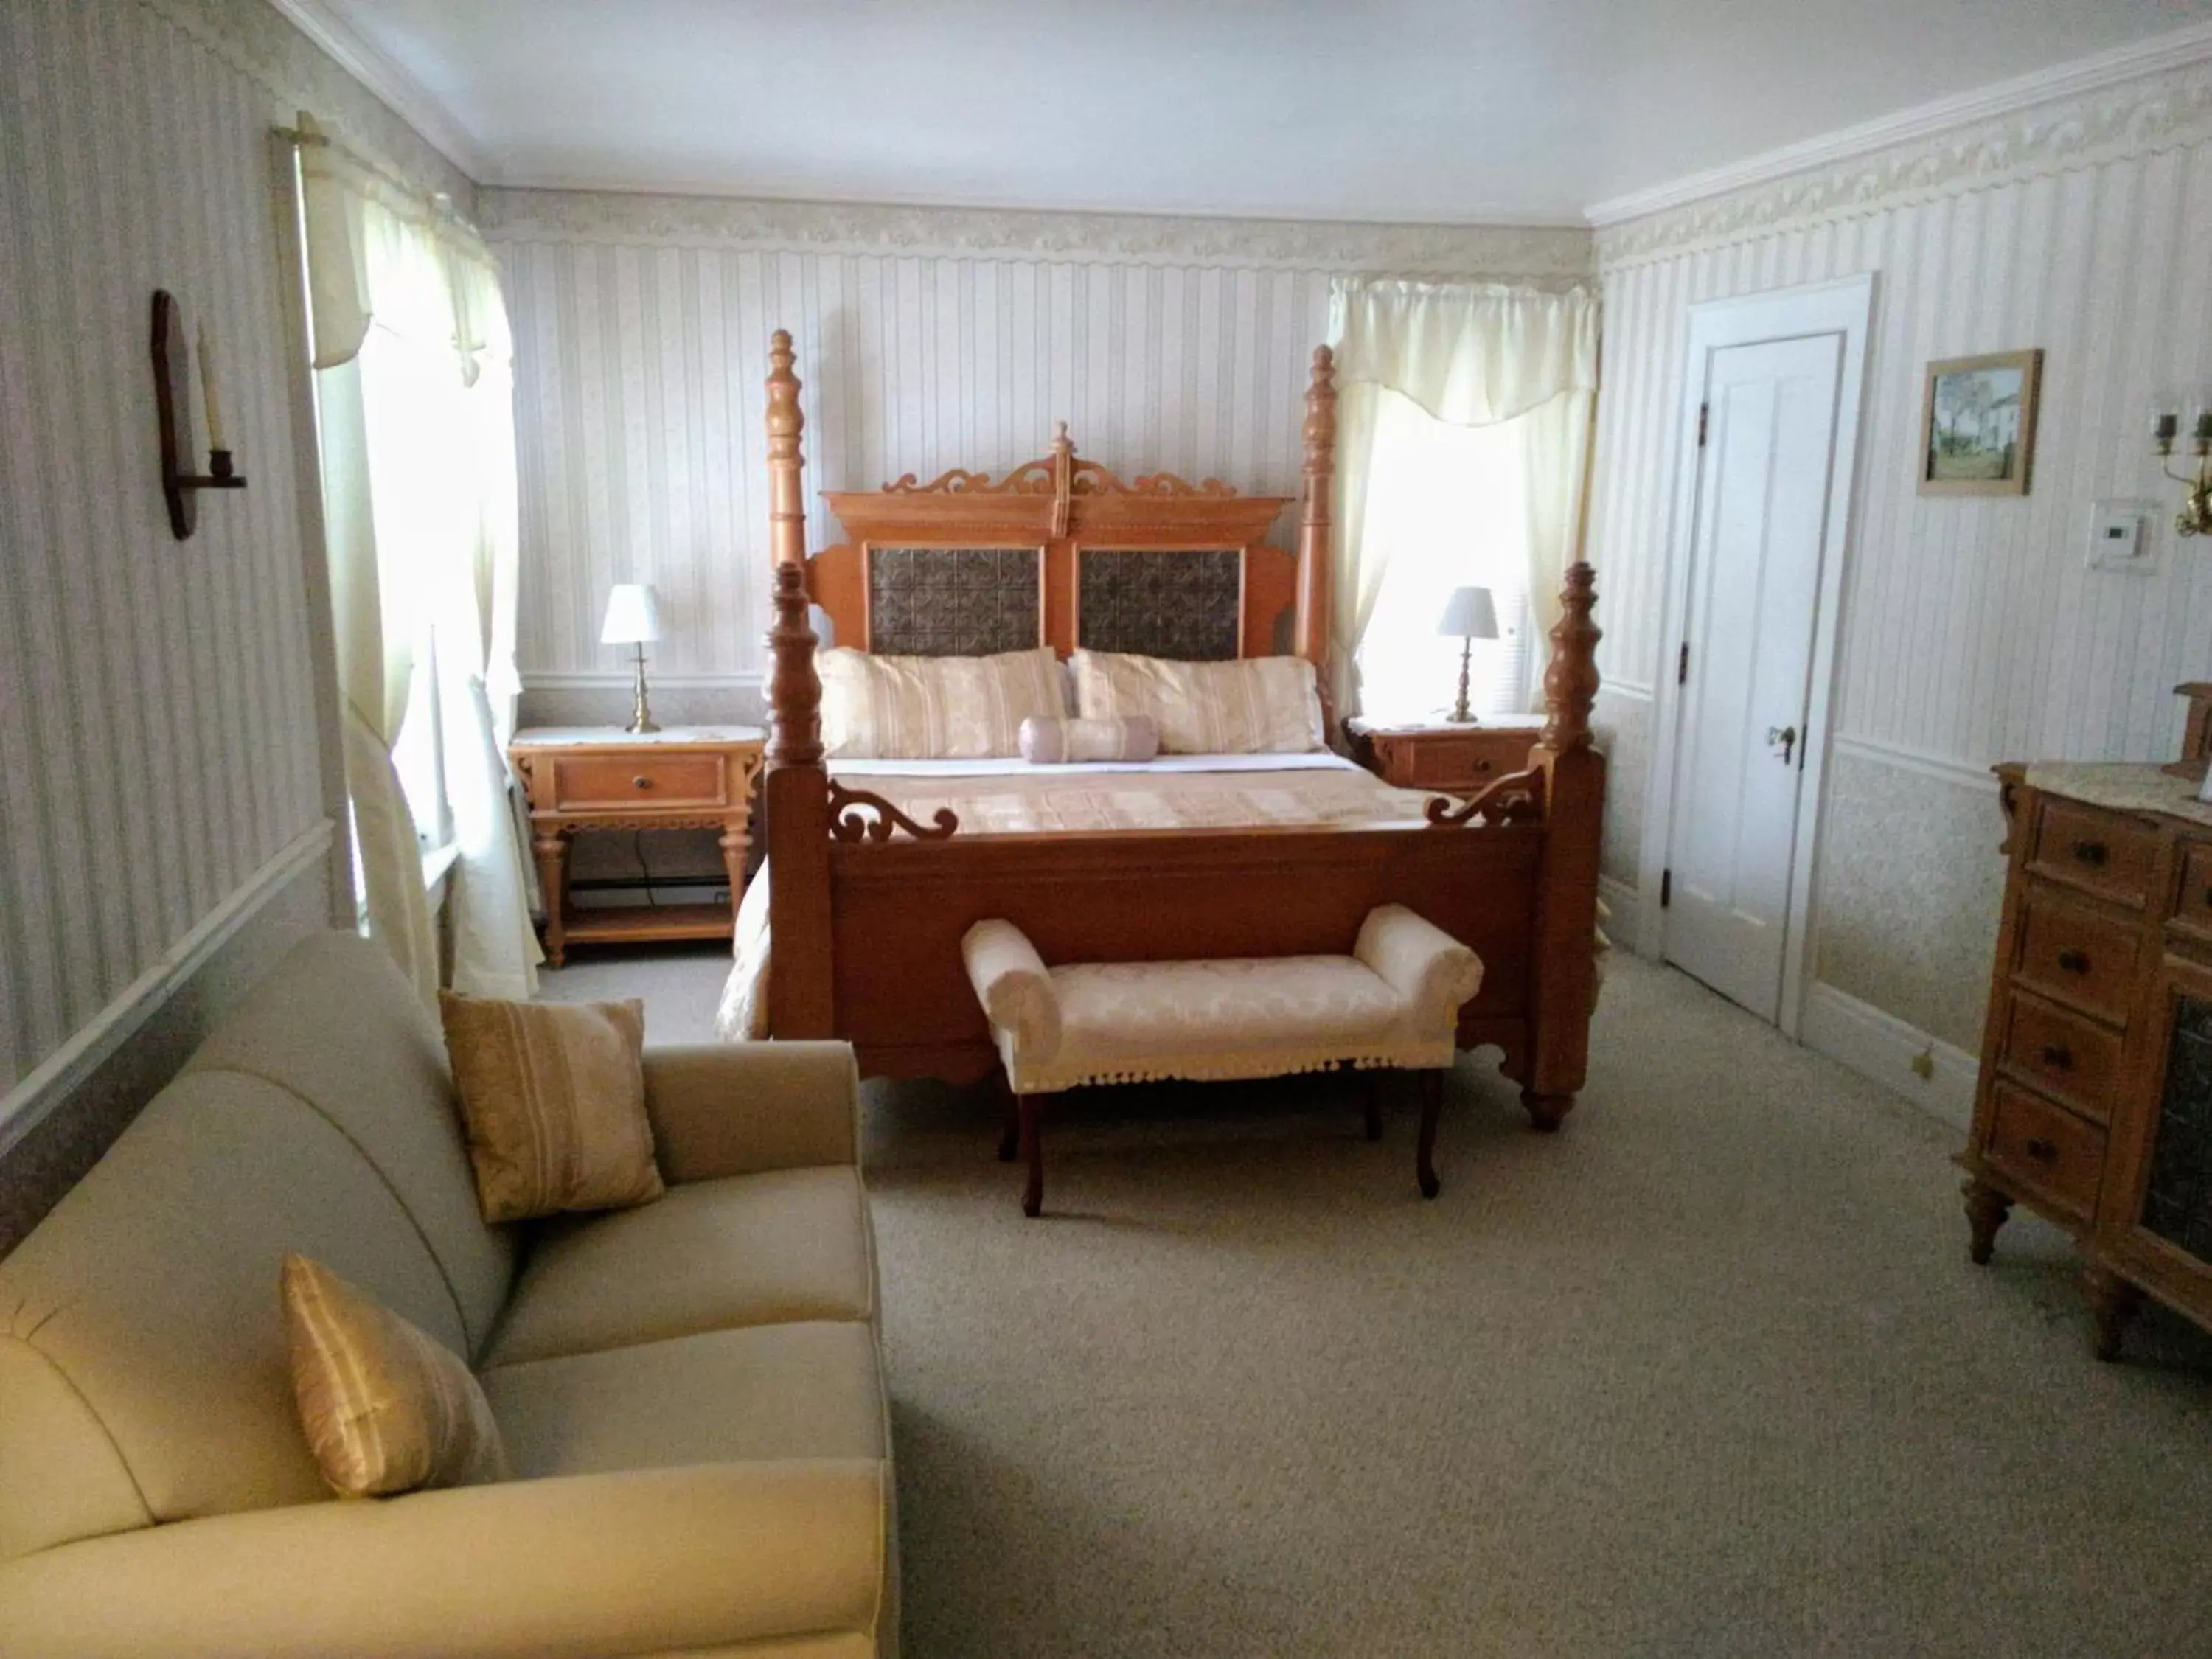 Bedroom, Seating Area in Splendor Inn Bed & Breakfast